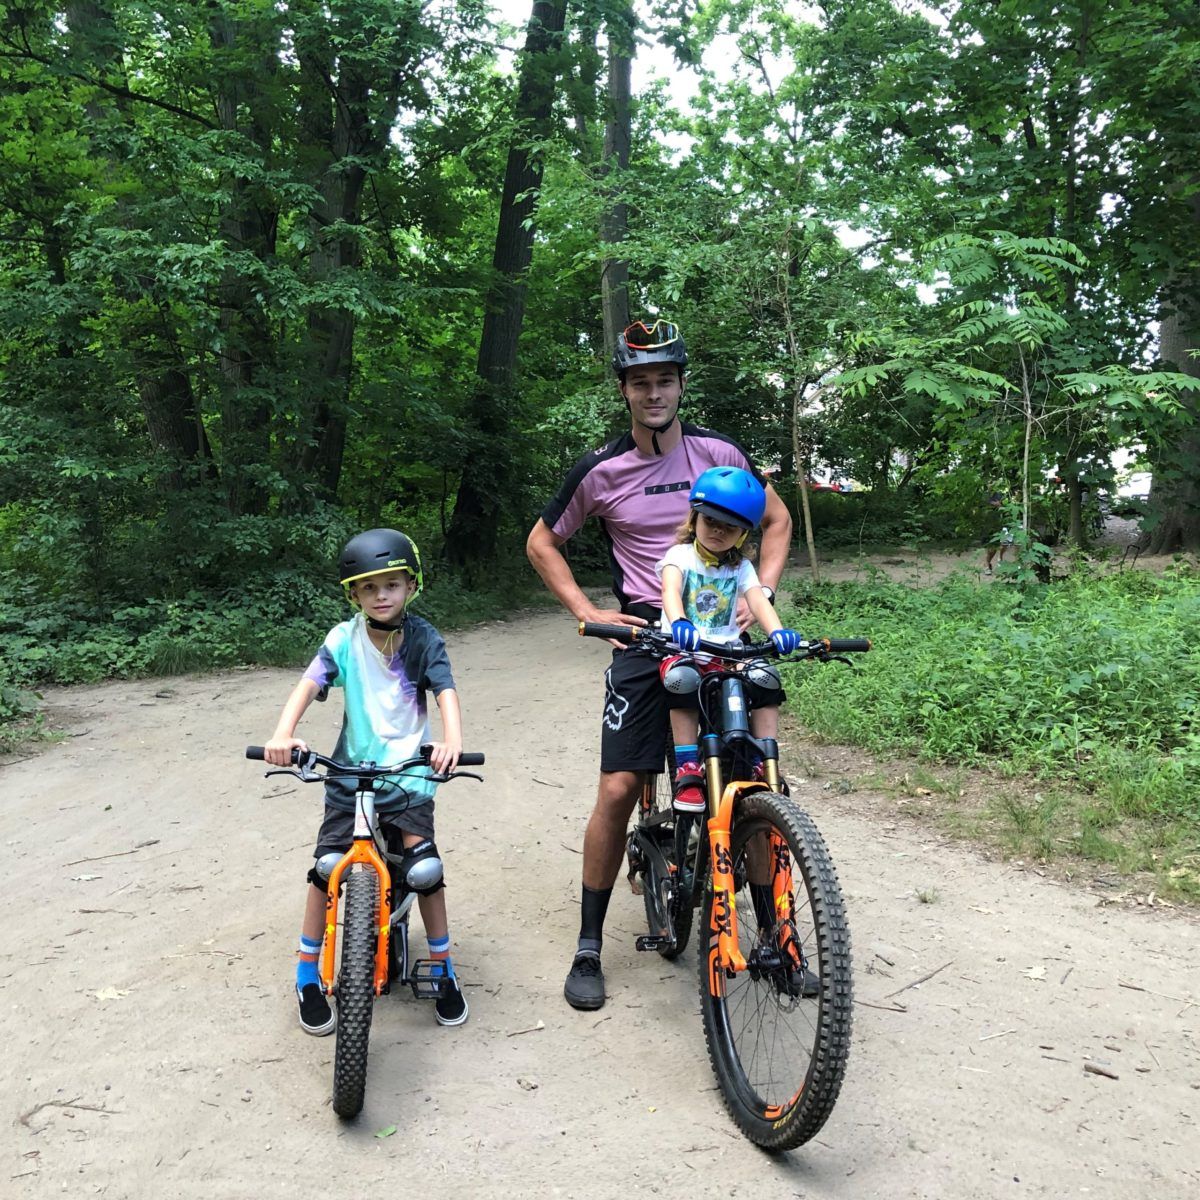 All Kids Bike ambassador Francisco "Chico" Lachowski and his two sons riding orange mountain bikes